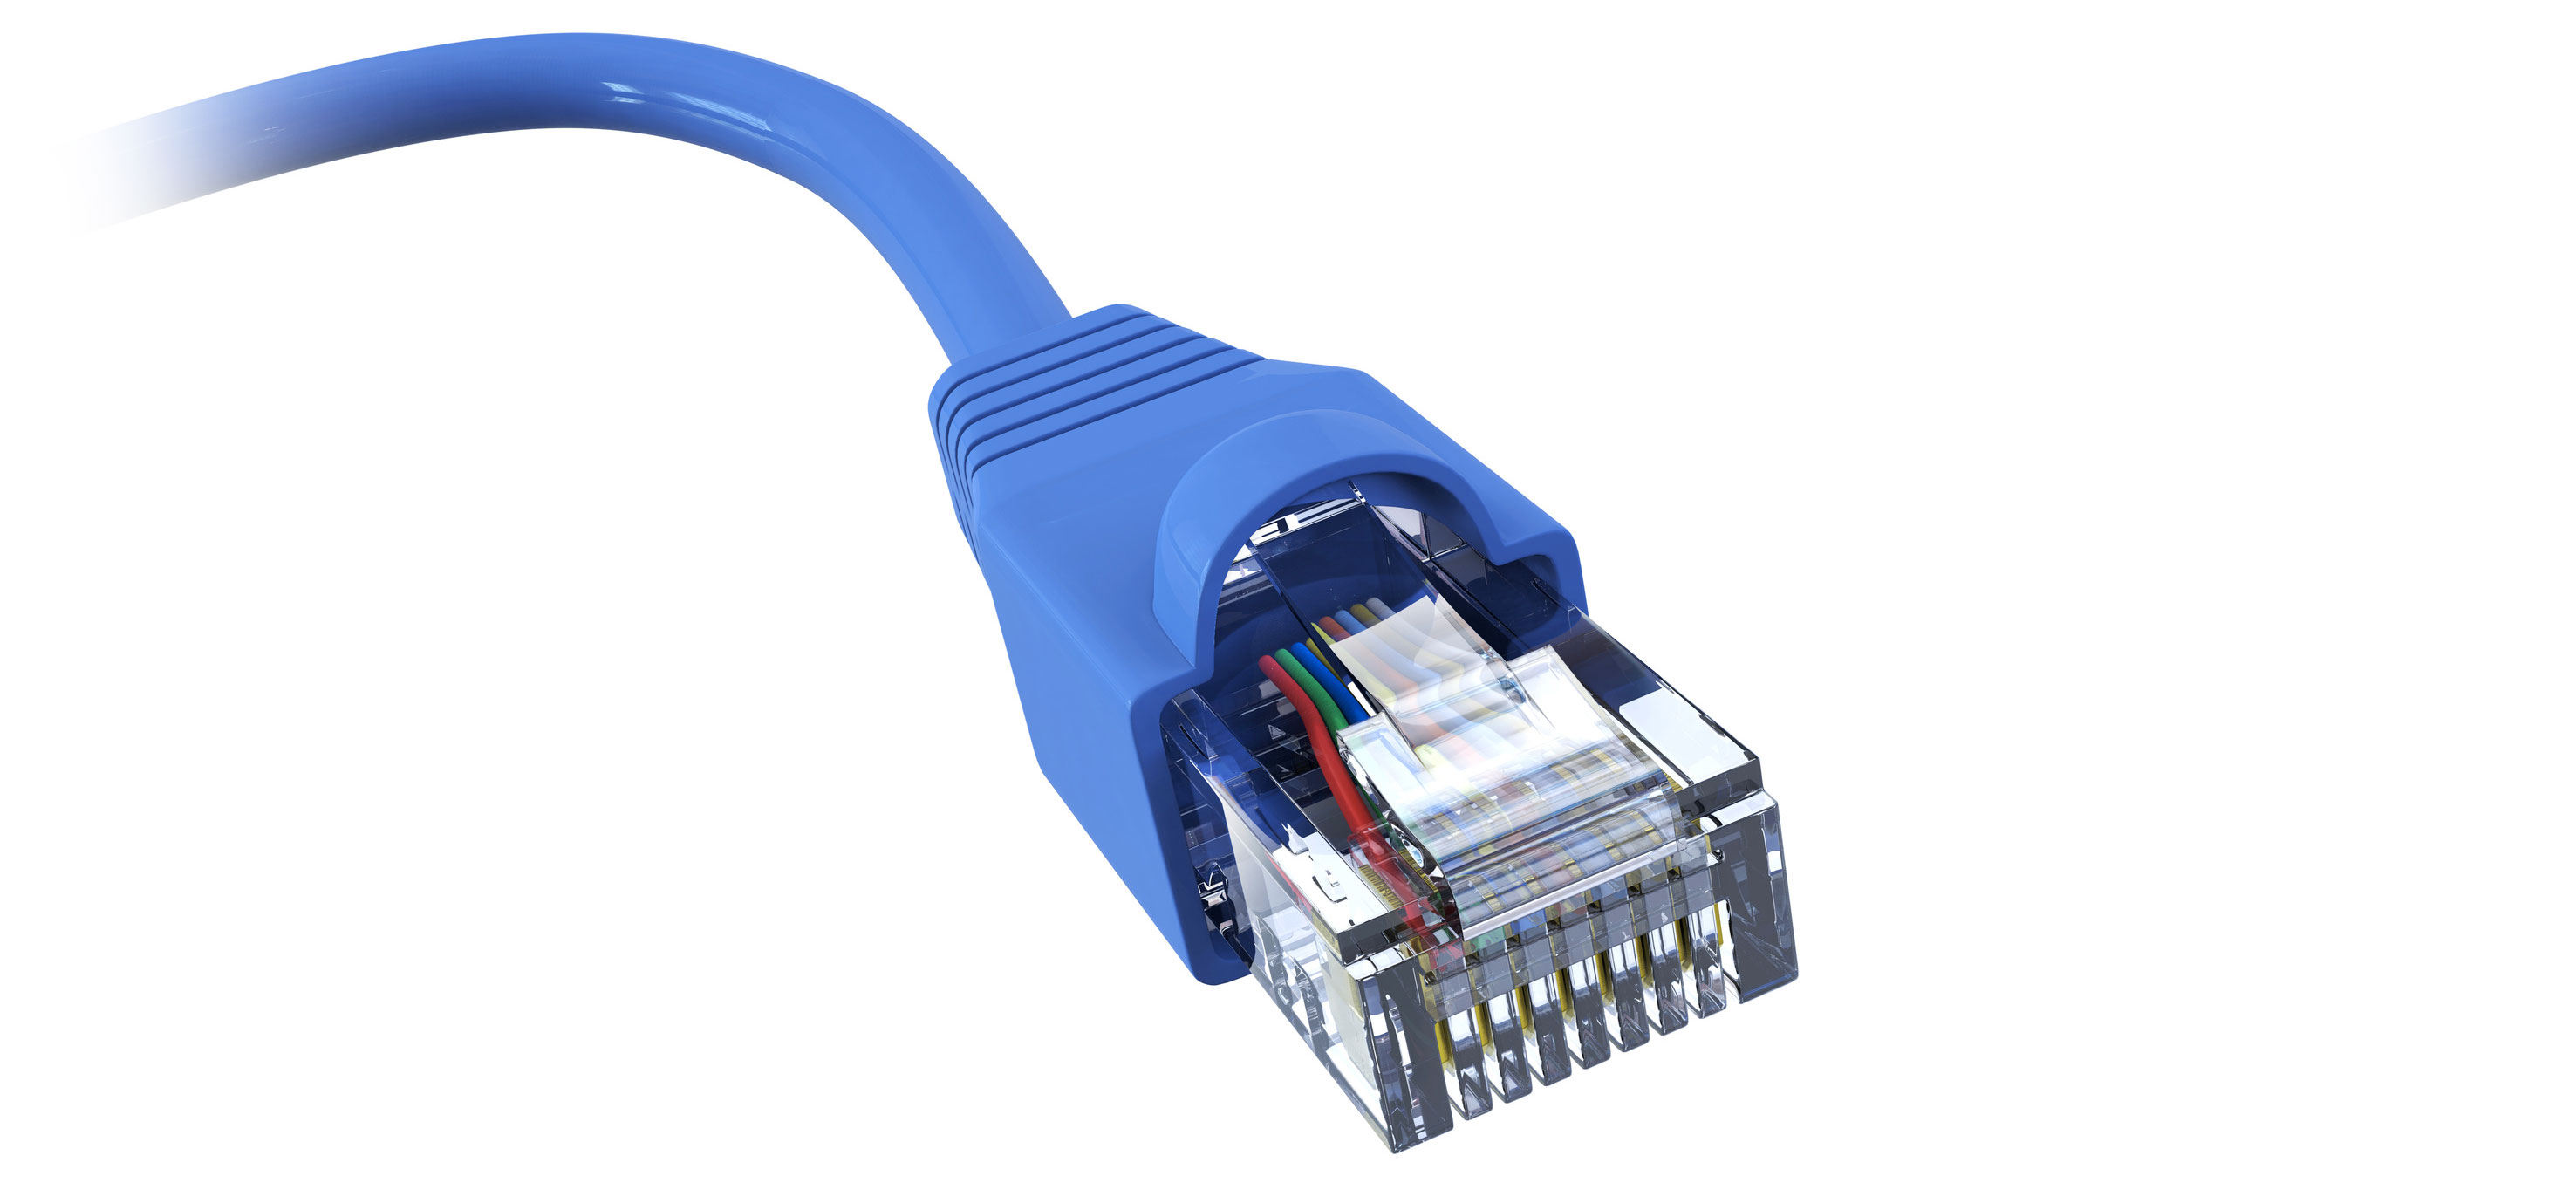 https://www.macfreak.nl/modules/news/images/zArt.EthernetCable.jpg